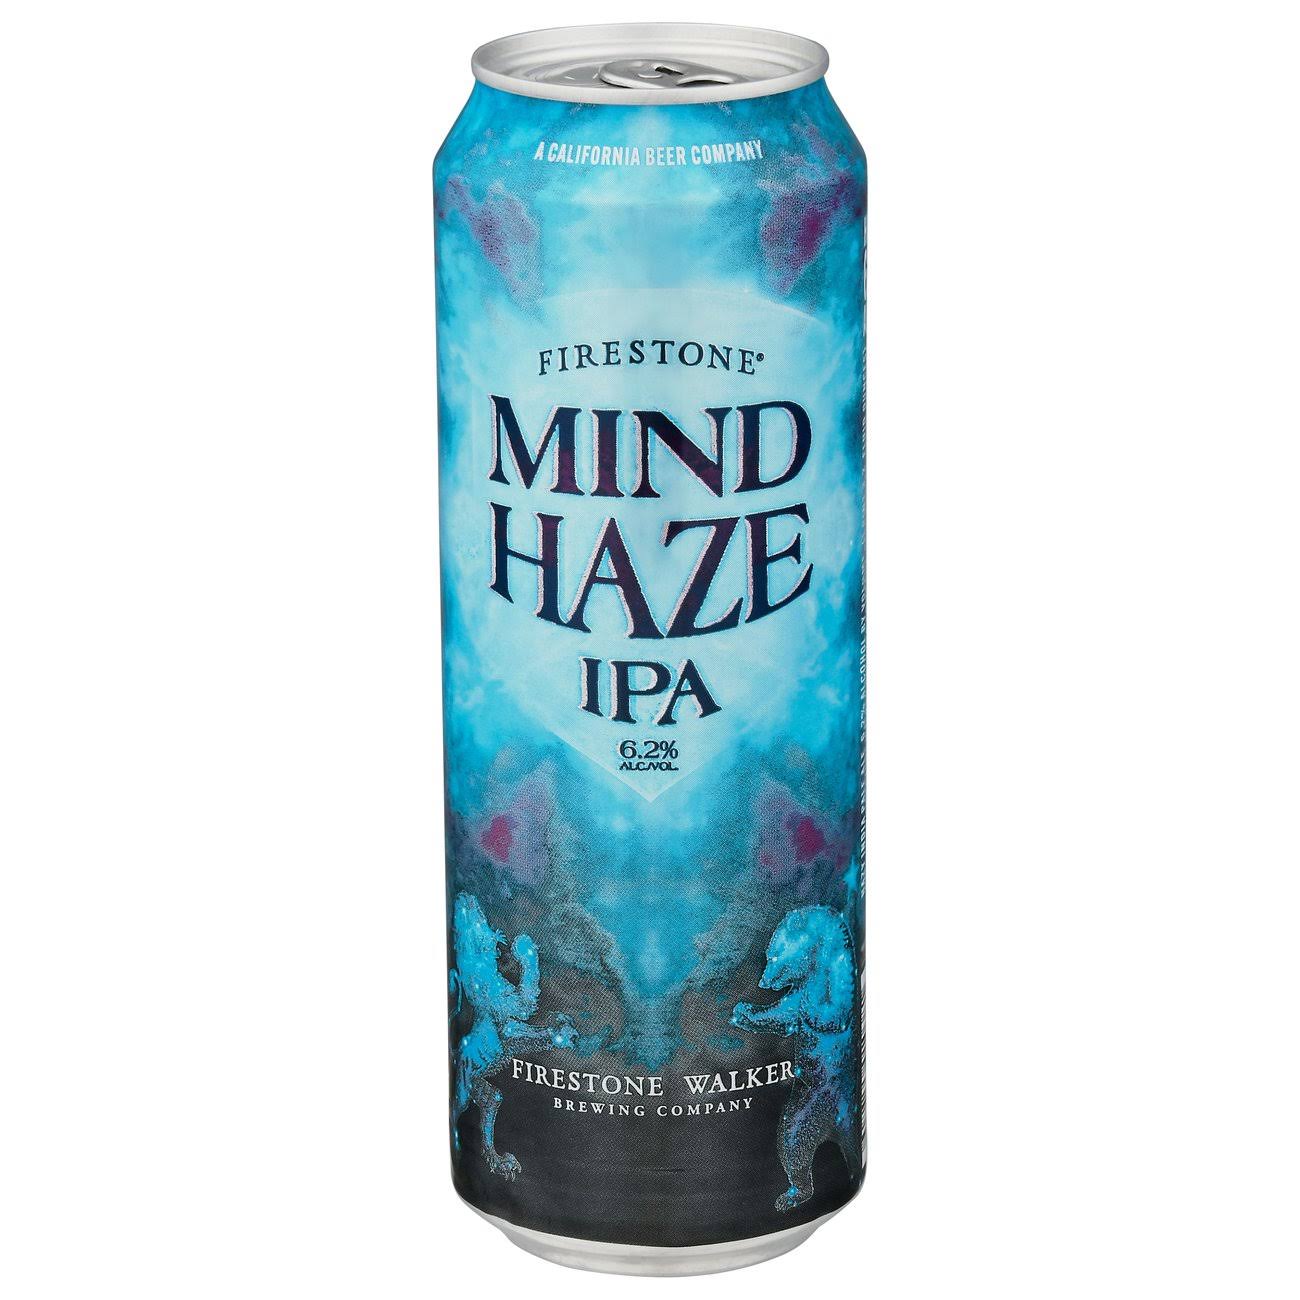 Firestone Walker Beer, IPA, Mind Haze - 19.2 fl oz